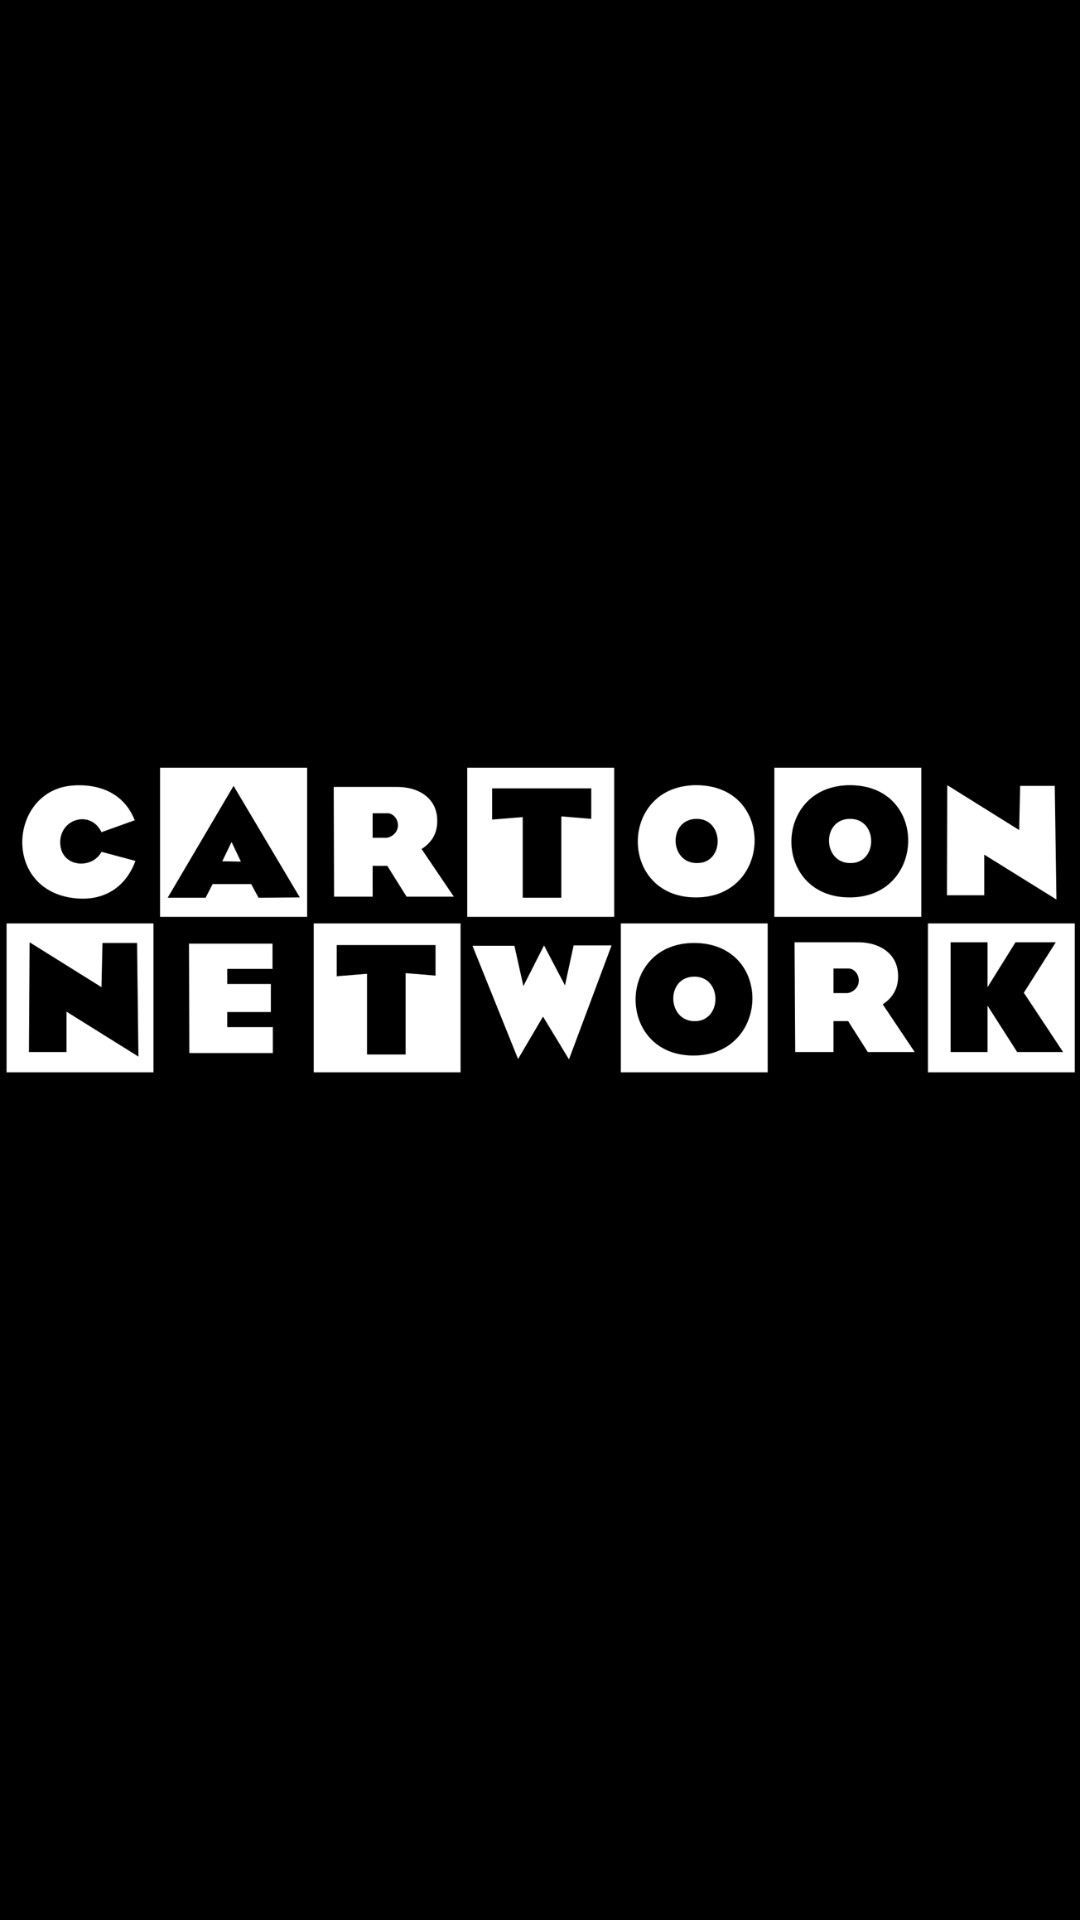 Cartoon Network Wallpaper. Miss those days. Cartoon network, Cartoon, Networking